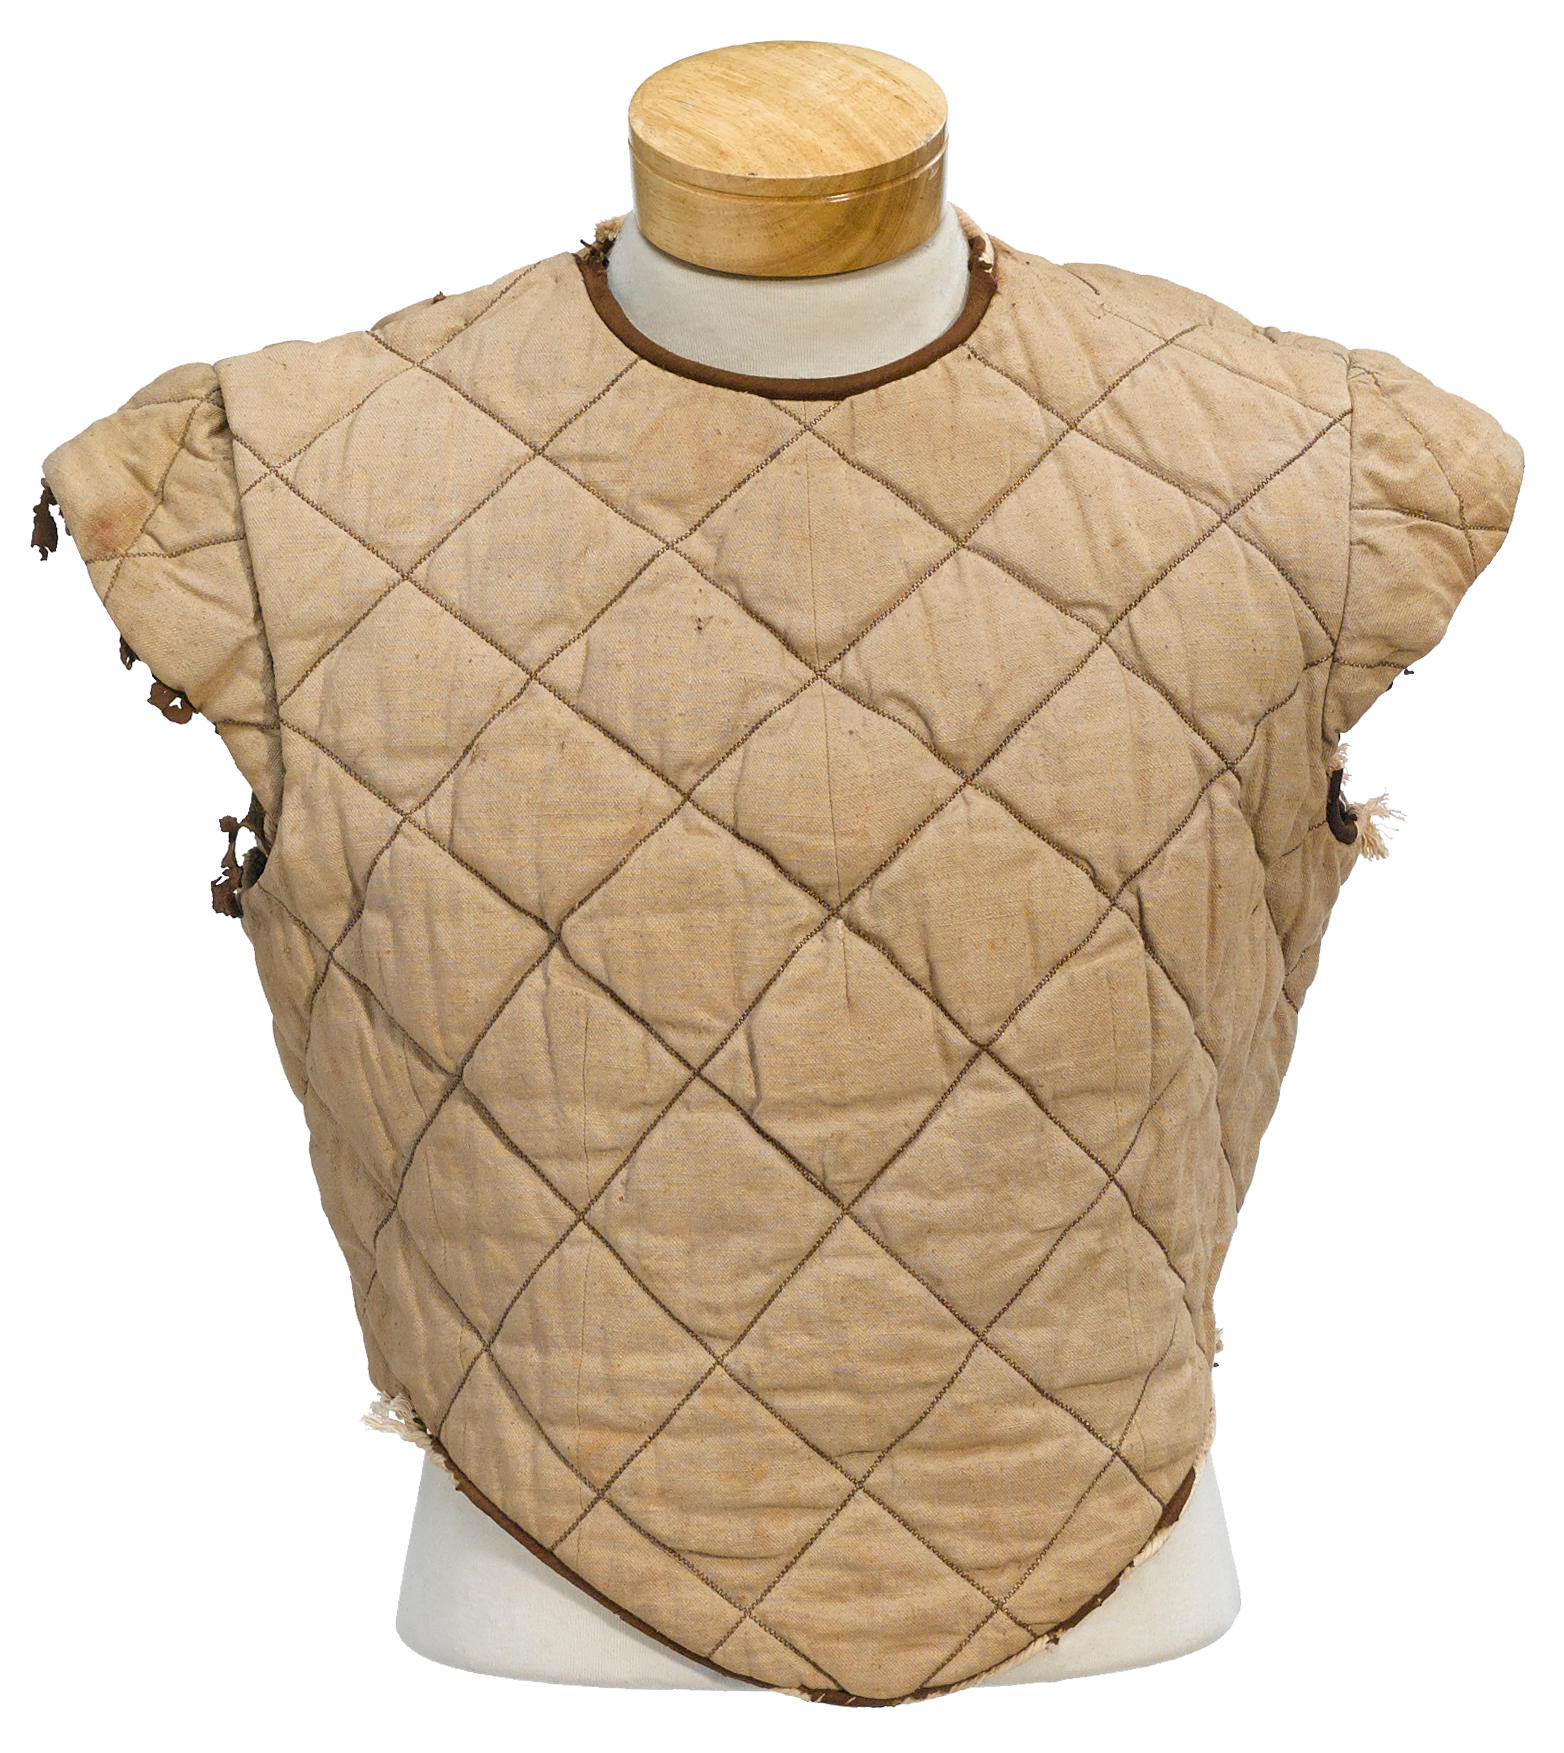 Two Stewart Granger fencing vests worn in Scaramouche